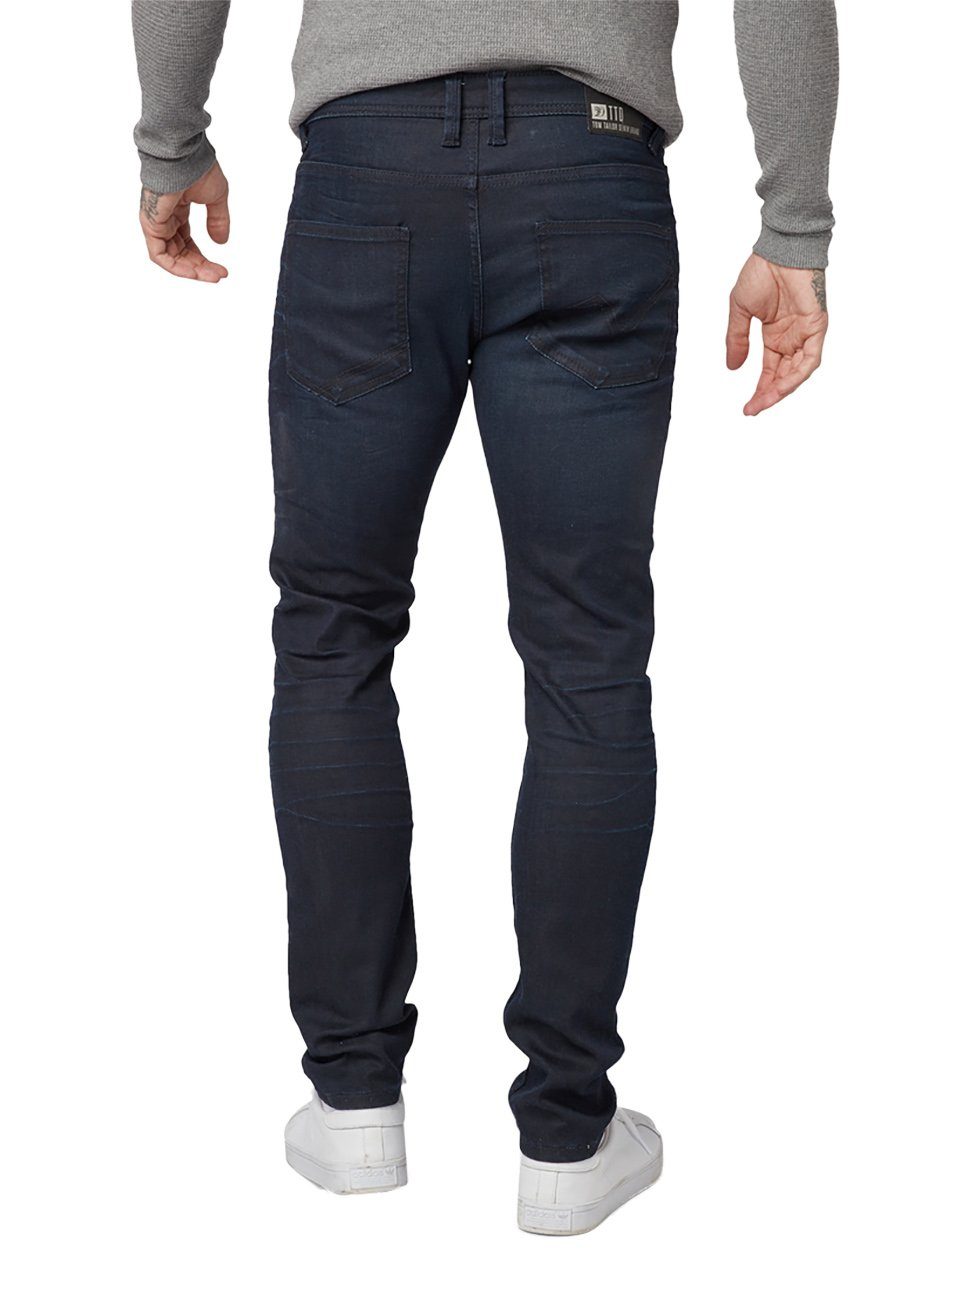 Piers TAILOR Stretch Denim Jeanshose mit Slim-fit-Jeans TOM